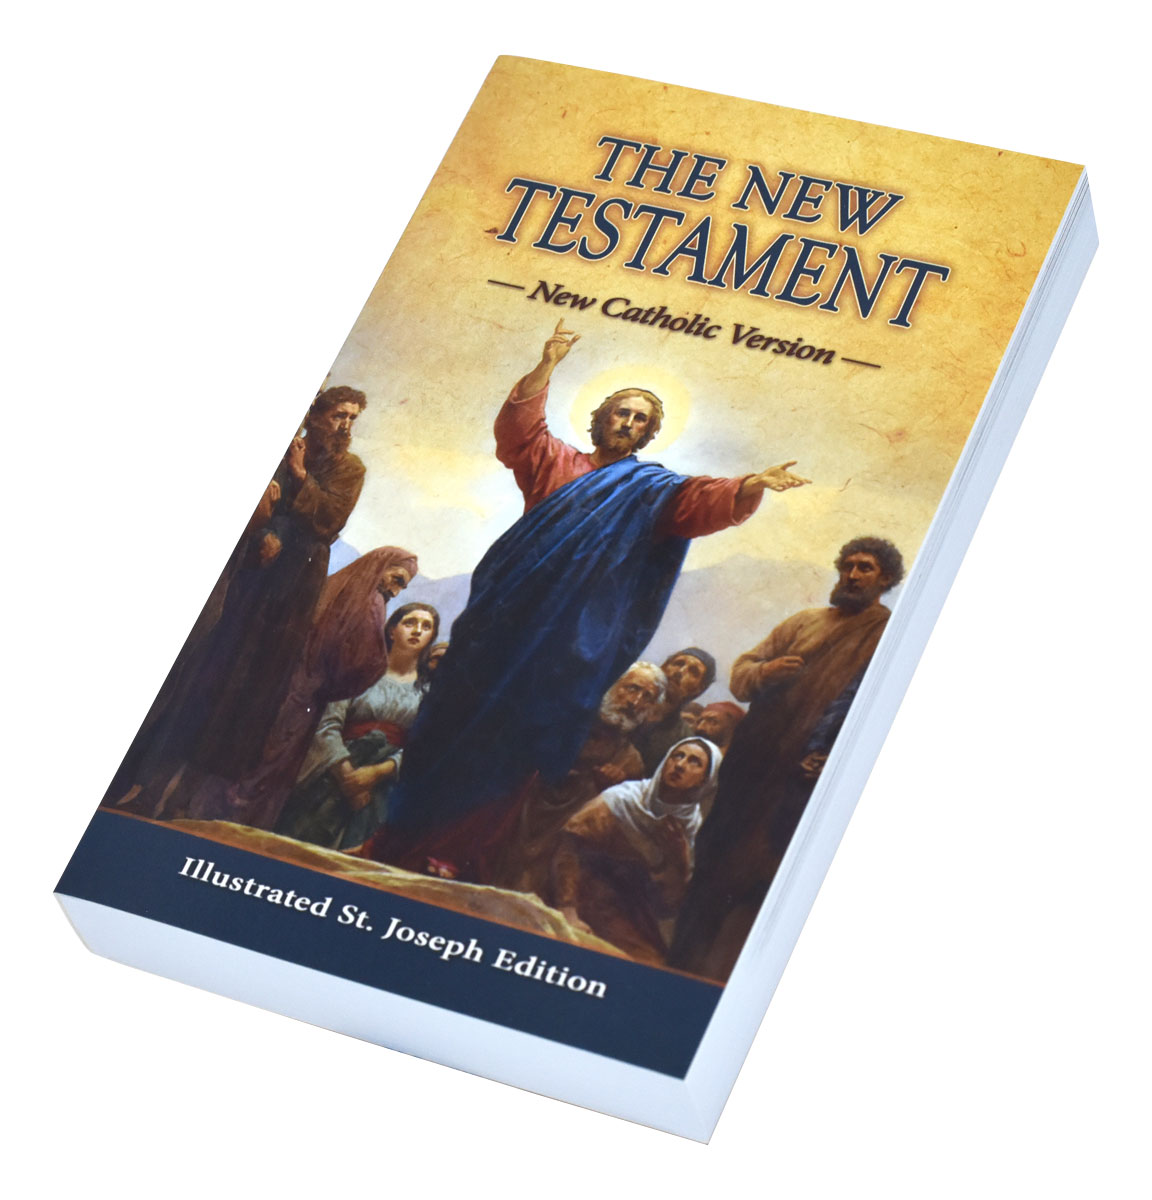 St. Joseph New Catholic Version New Testament Pocket Paperback 630/04